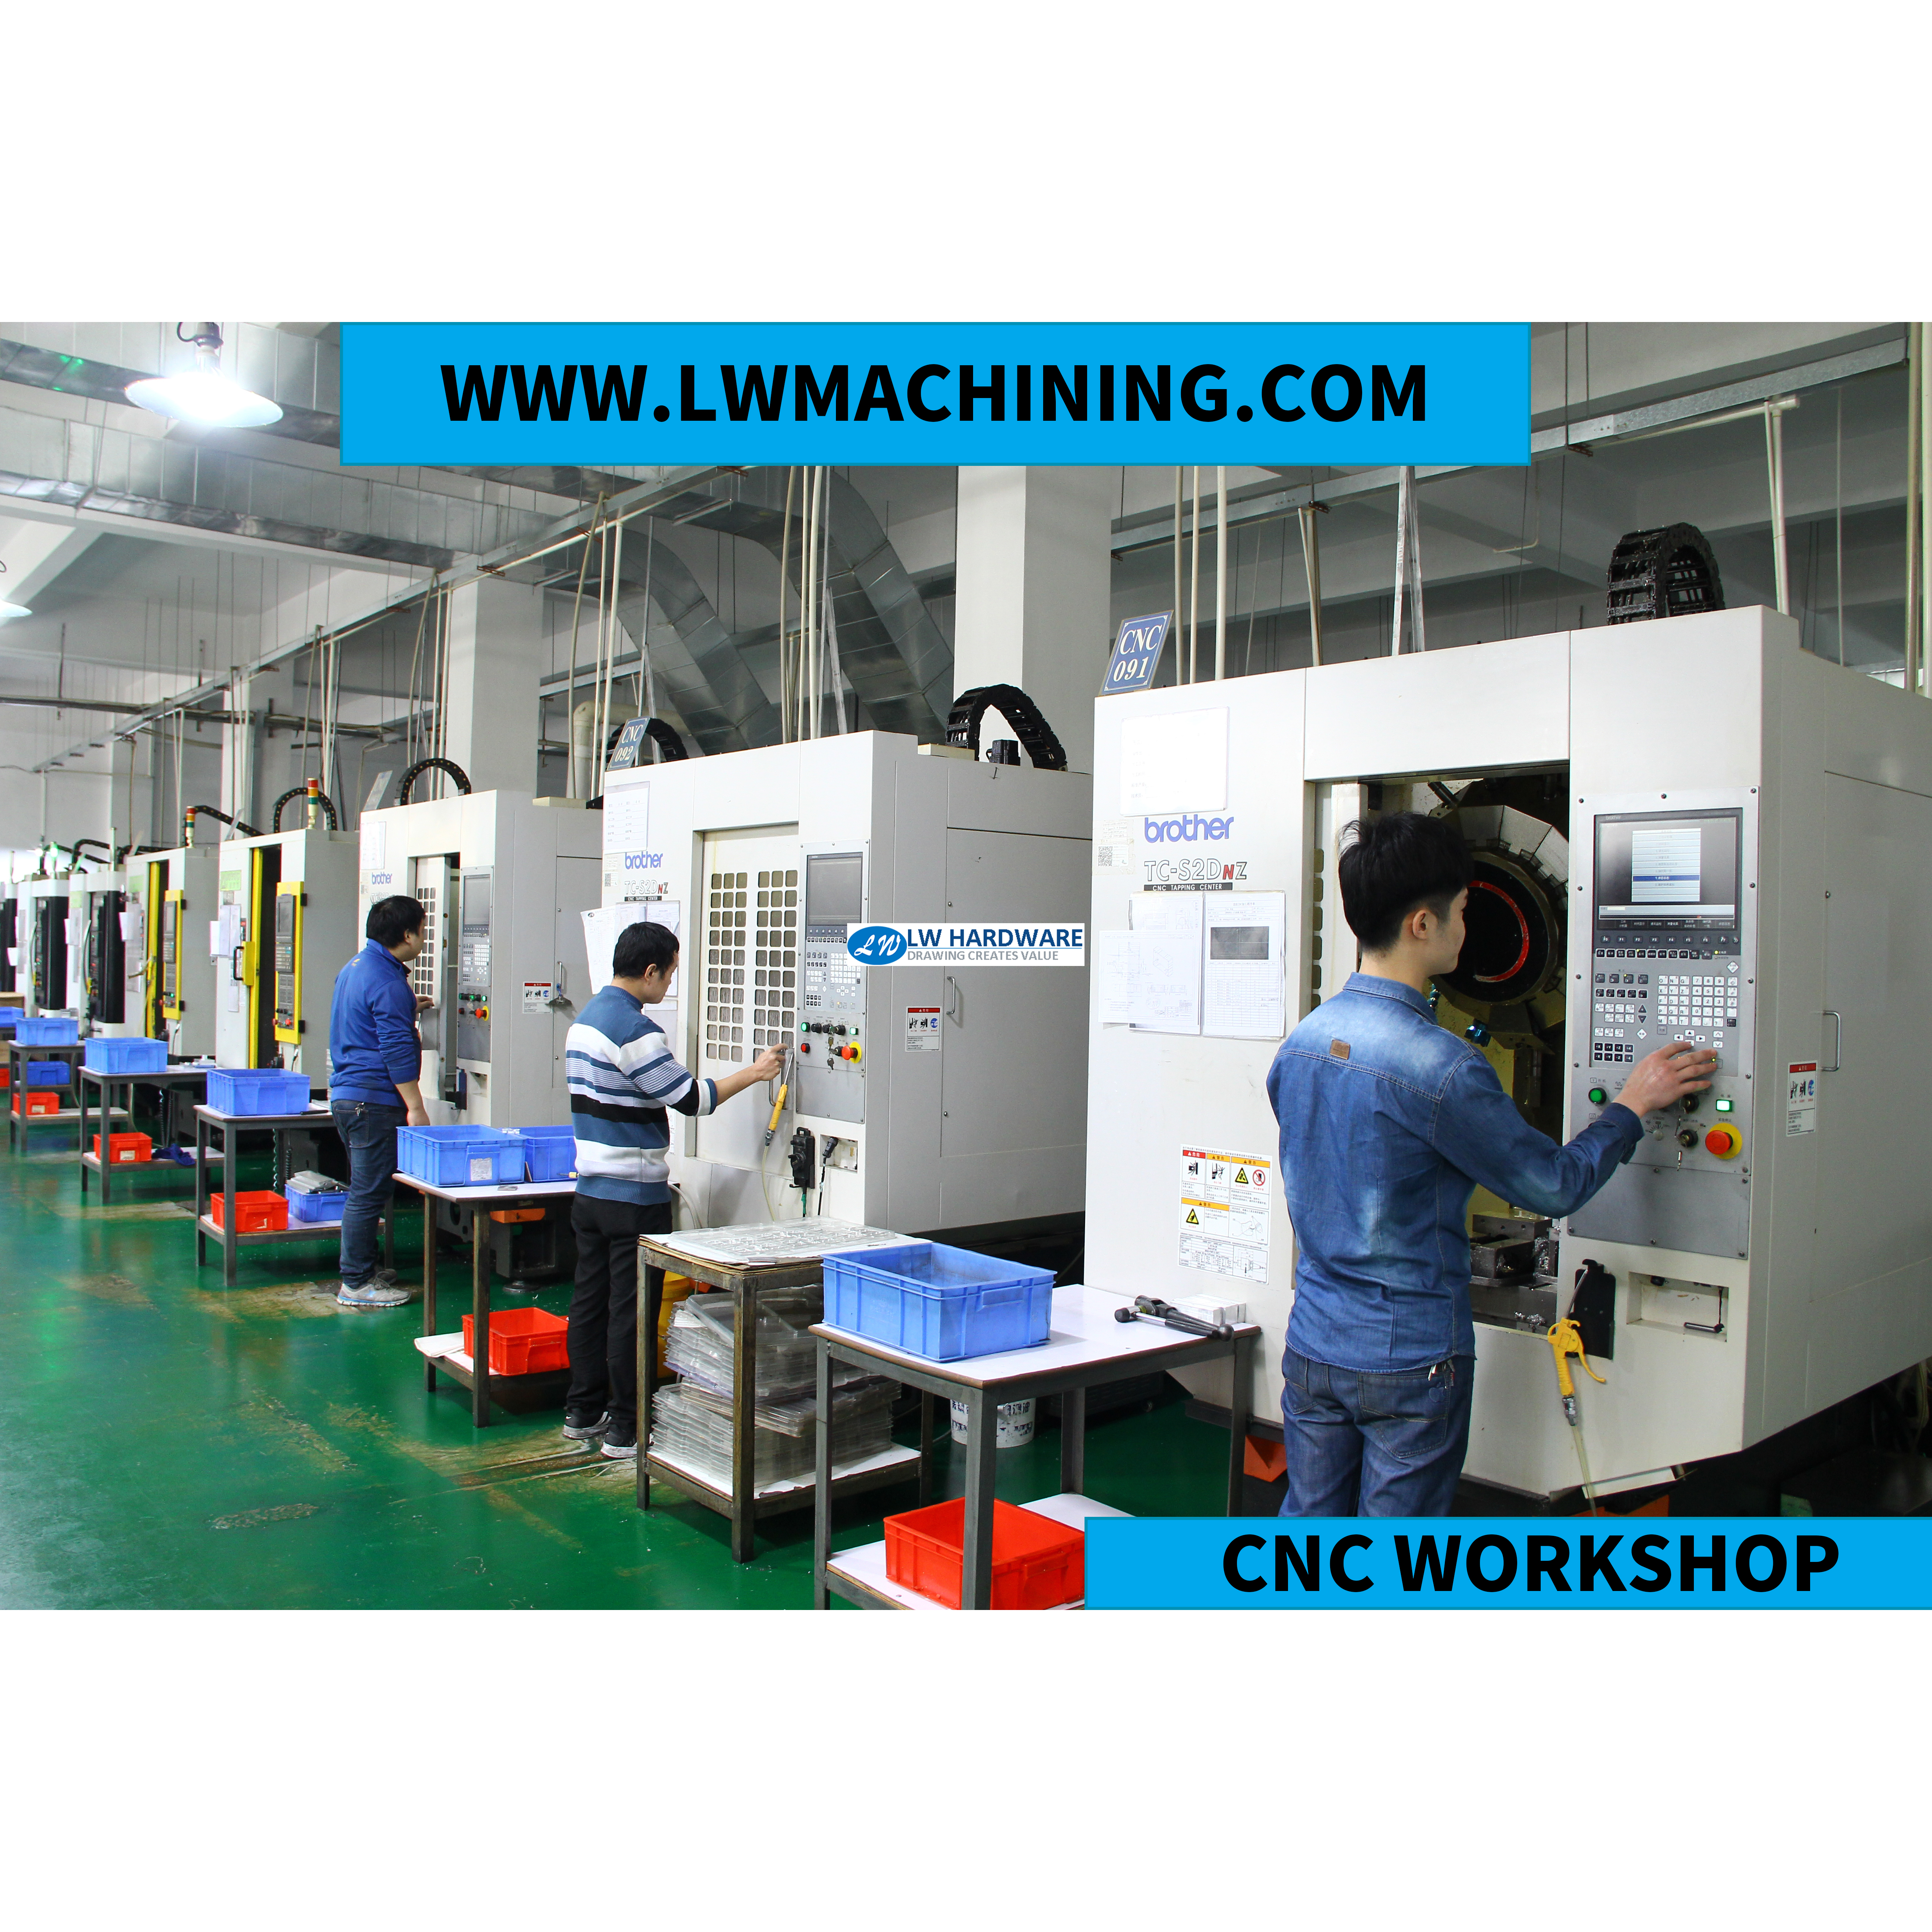 CNC MACHINING WORKSHOP